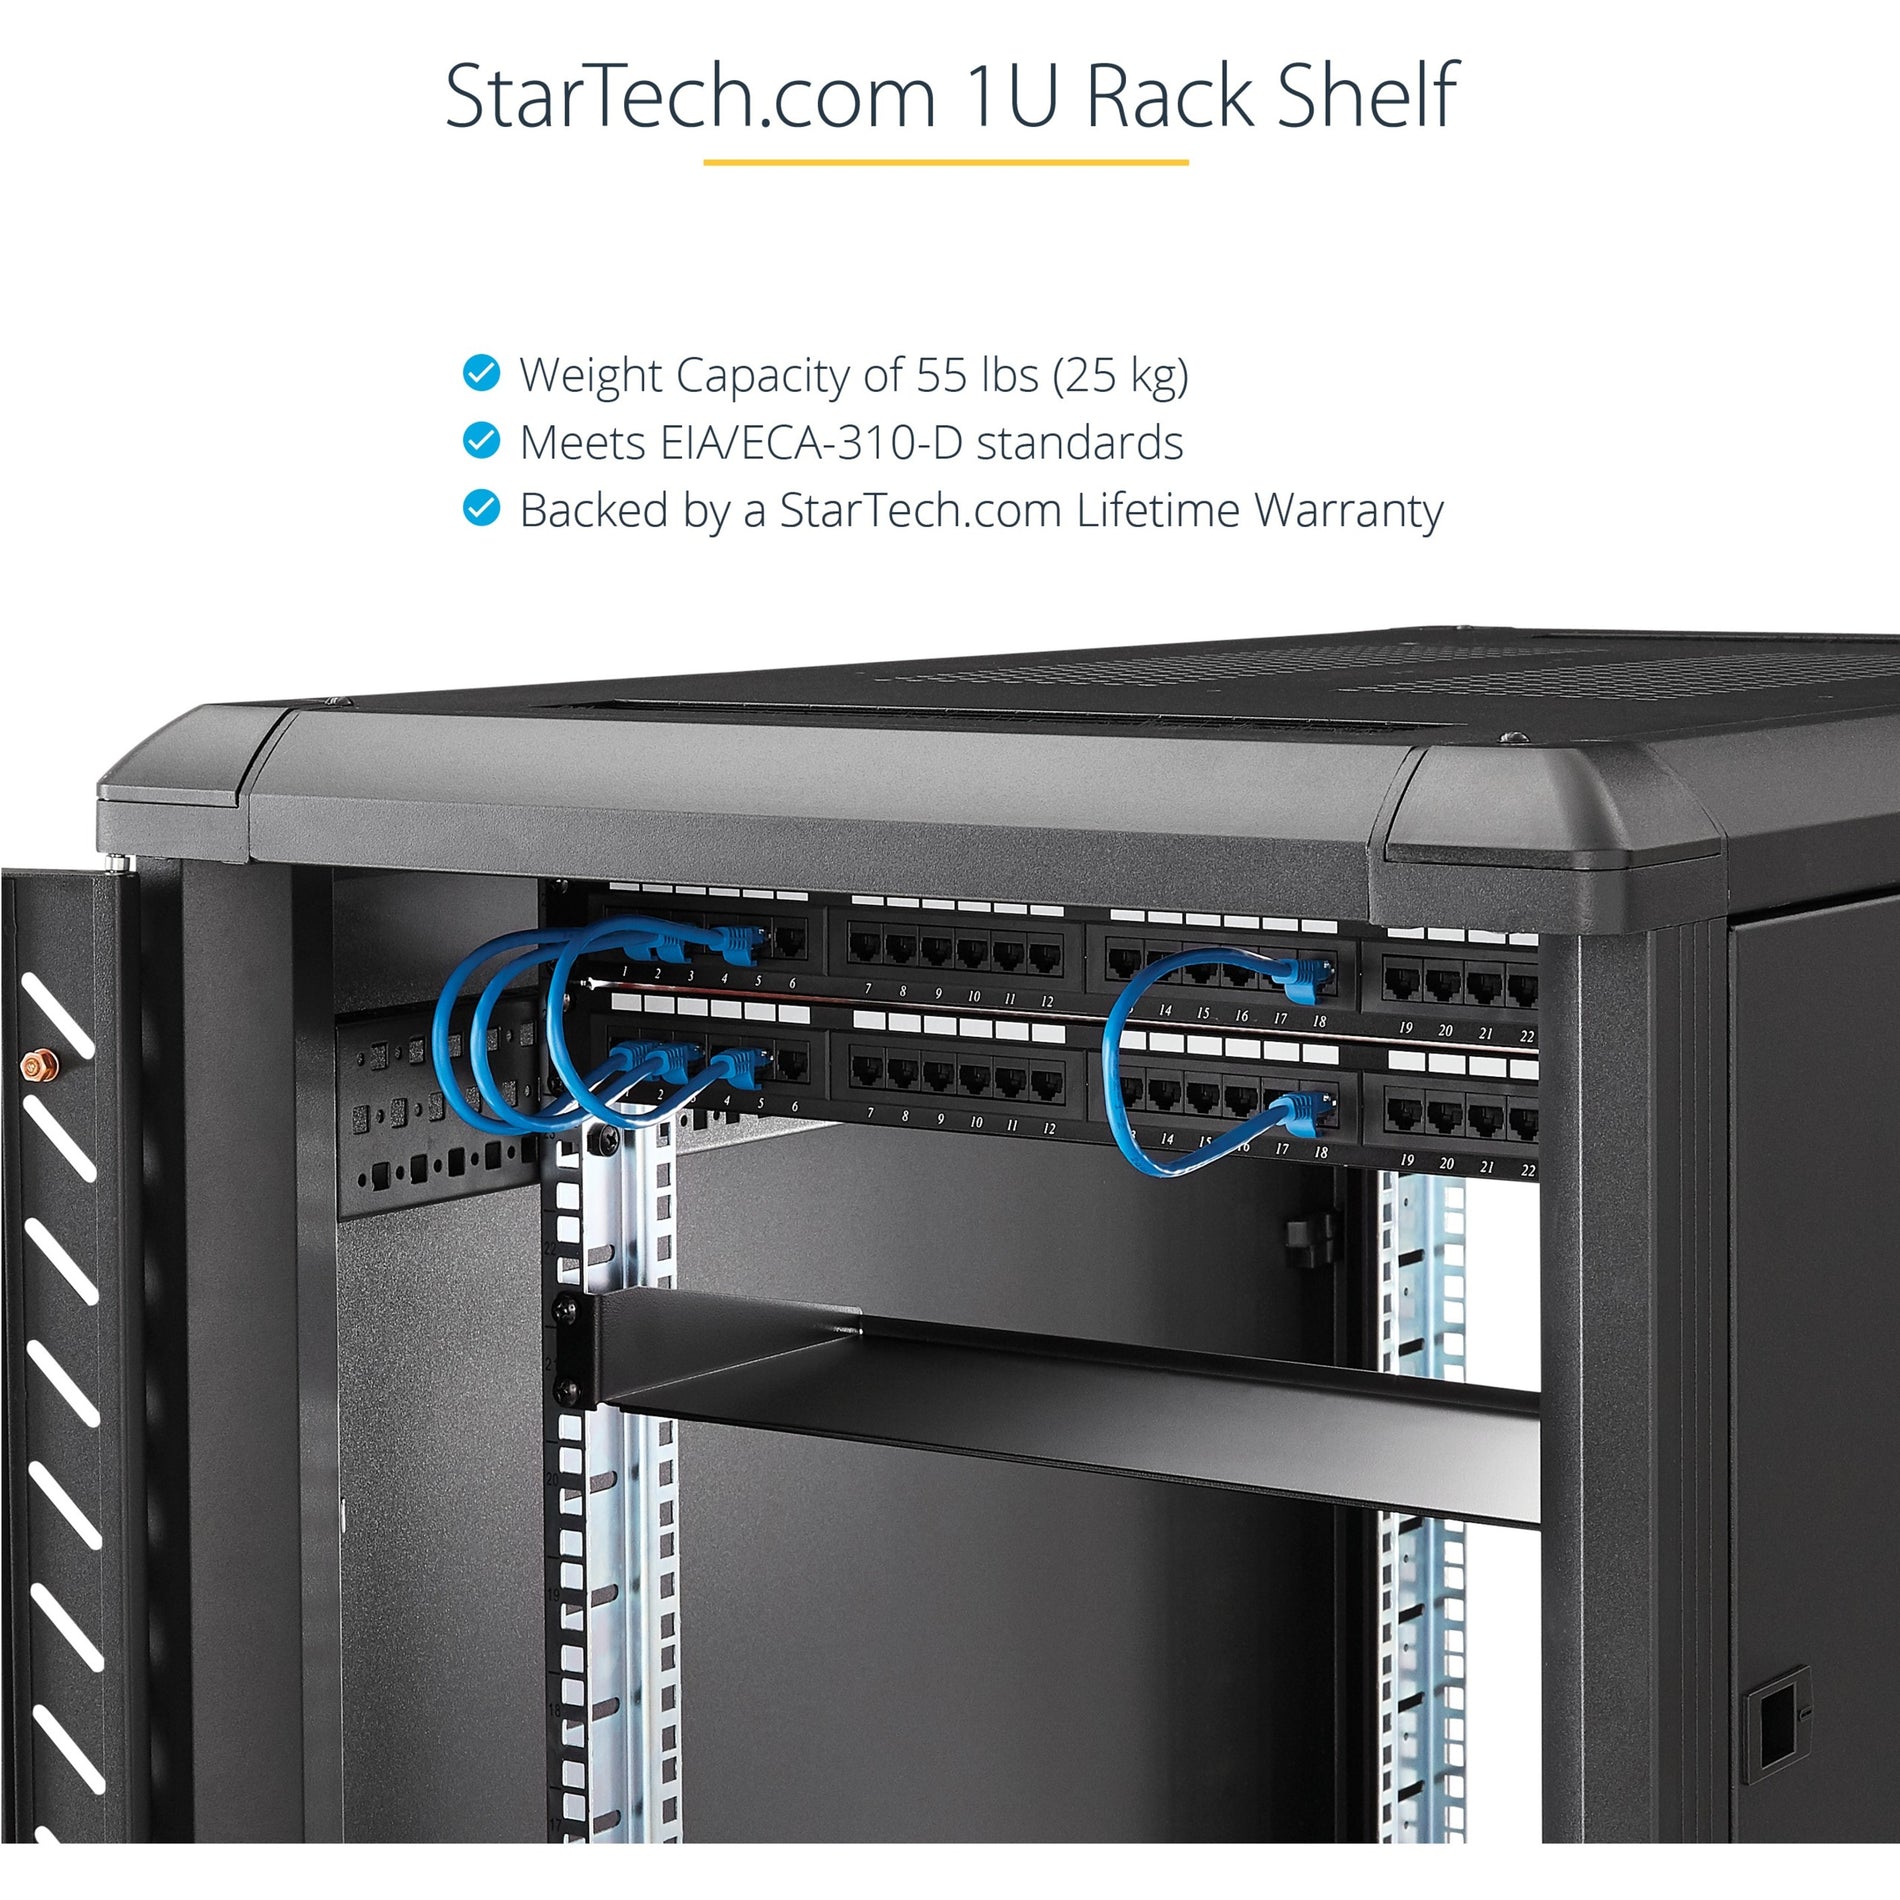 StarTech.com SHELF-1U-20-FIXED-S Universal Rack Shelf, Fixed 20" Deep Cantilever Tray for 19" Data/AV/Network Enclosure